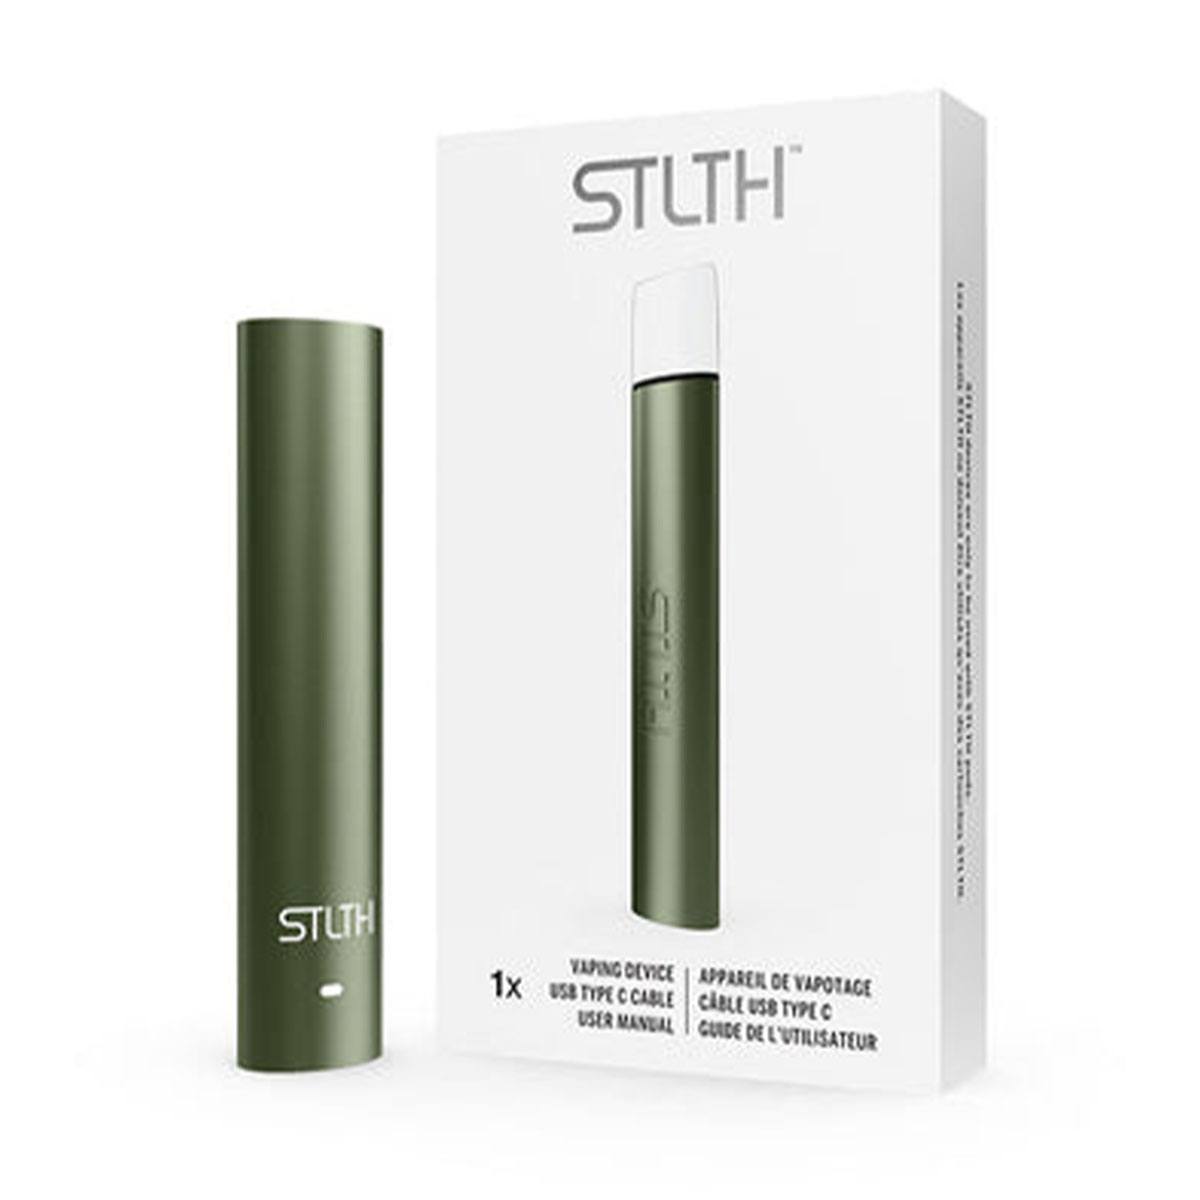 STLTH - Type-C Device Pod System STLTH Green Metal 